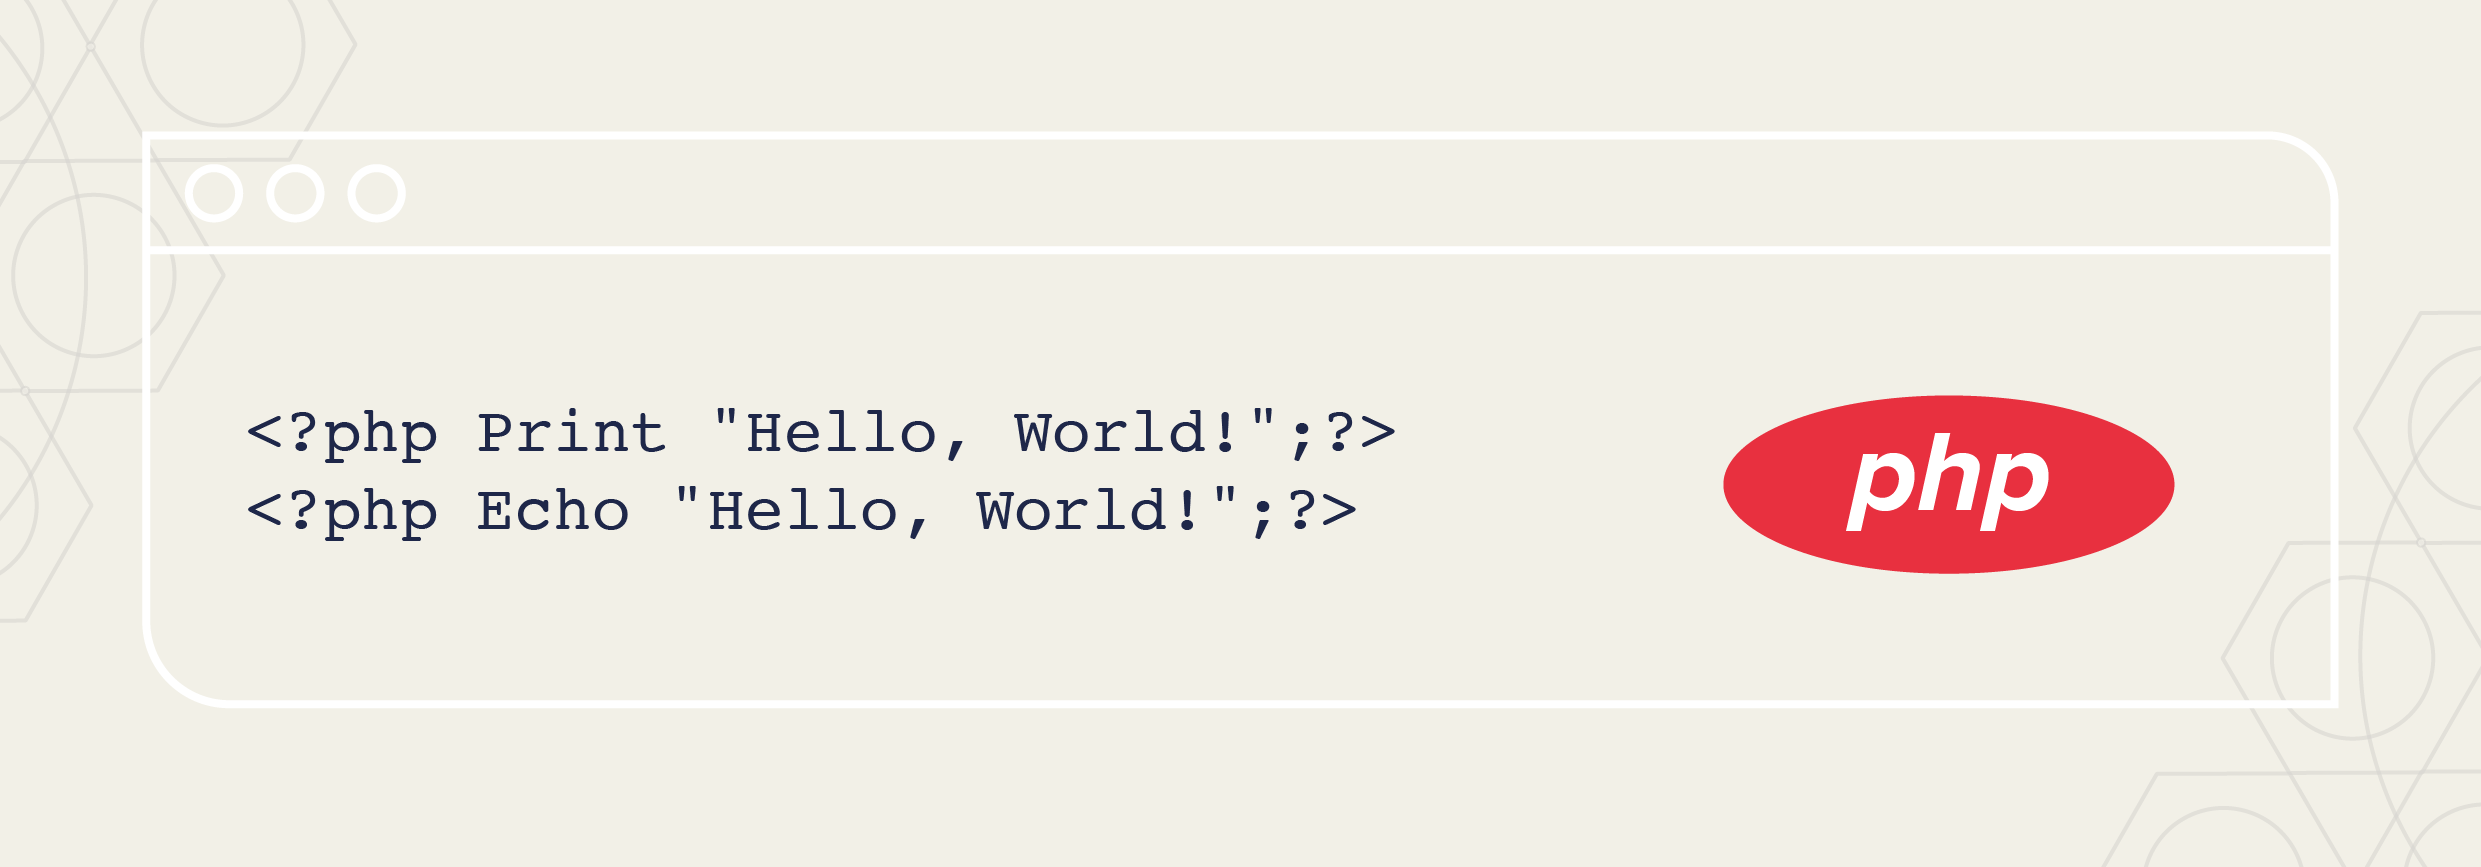 php programming language "hello world" code and logo